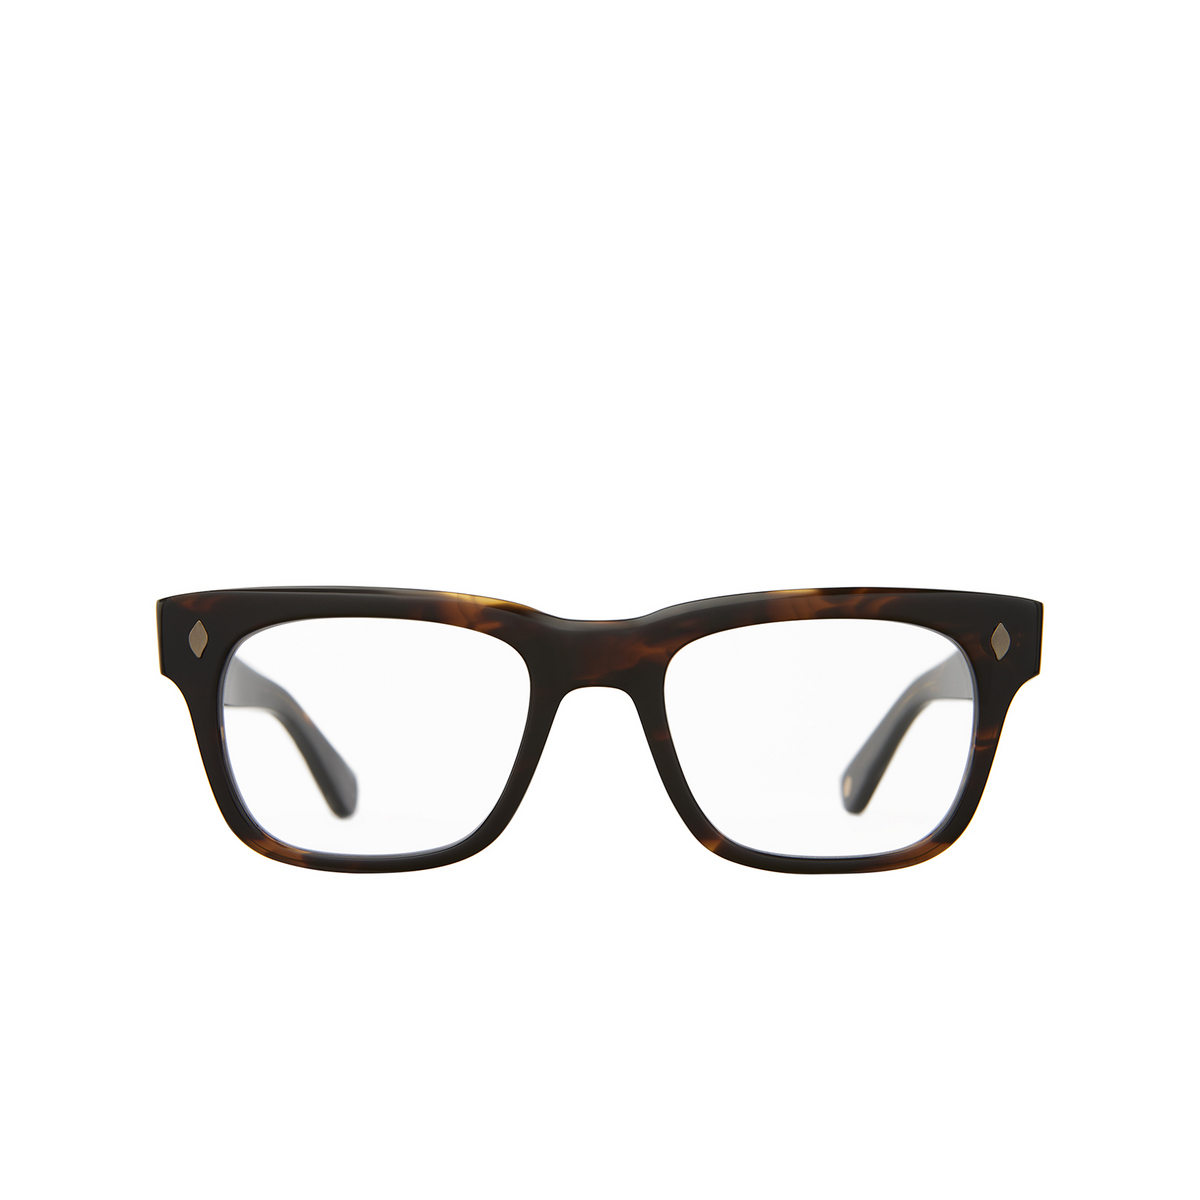 Garrett Leight TROUBADOUR Eyeglasses COFT Coffee Tortoise - front view